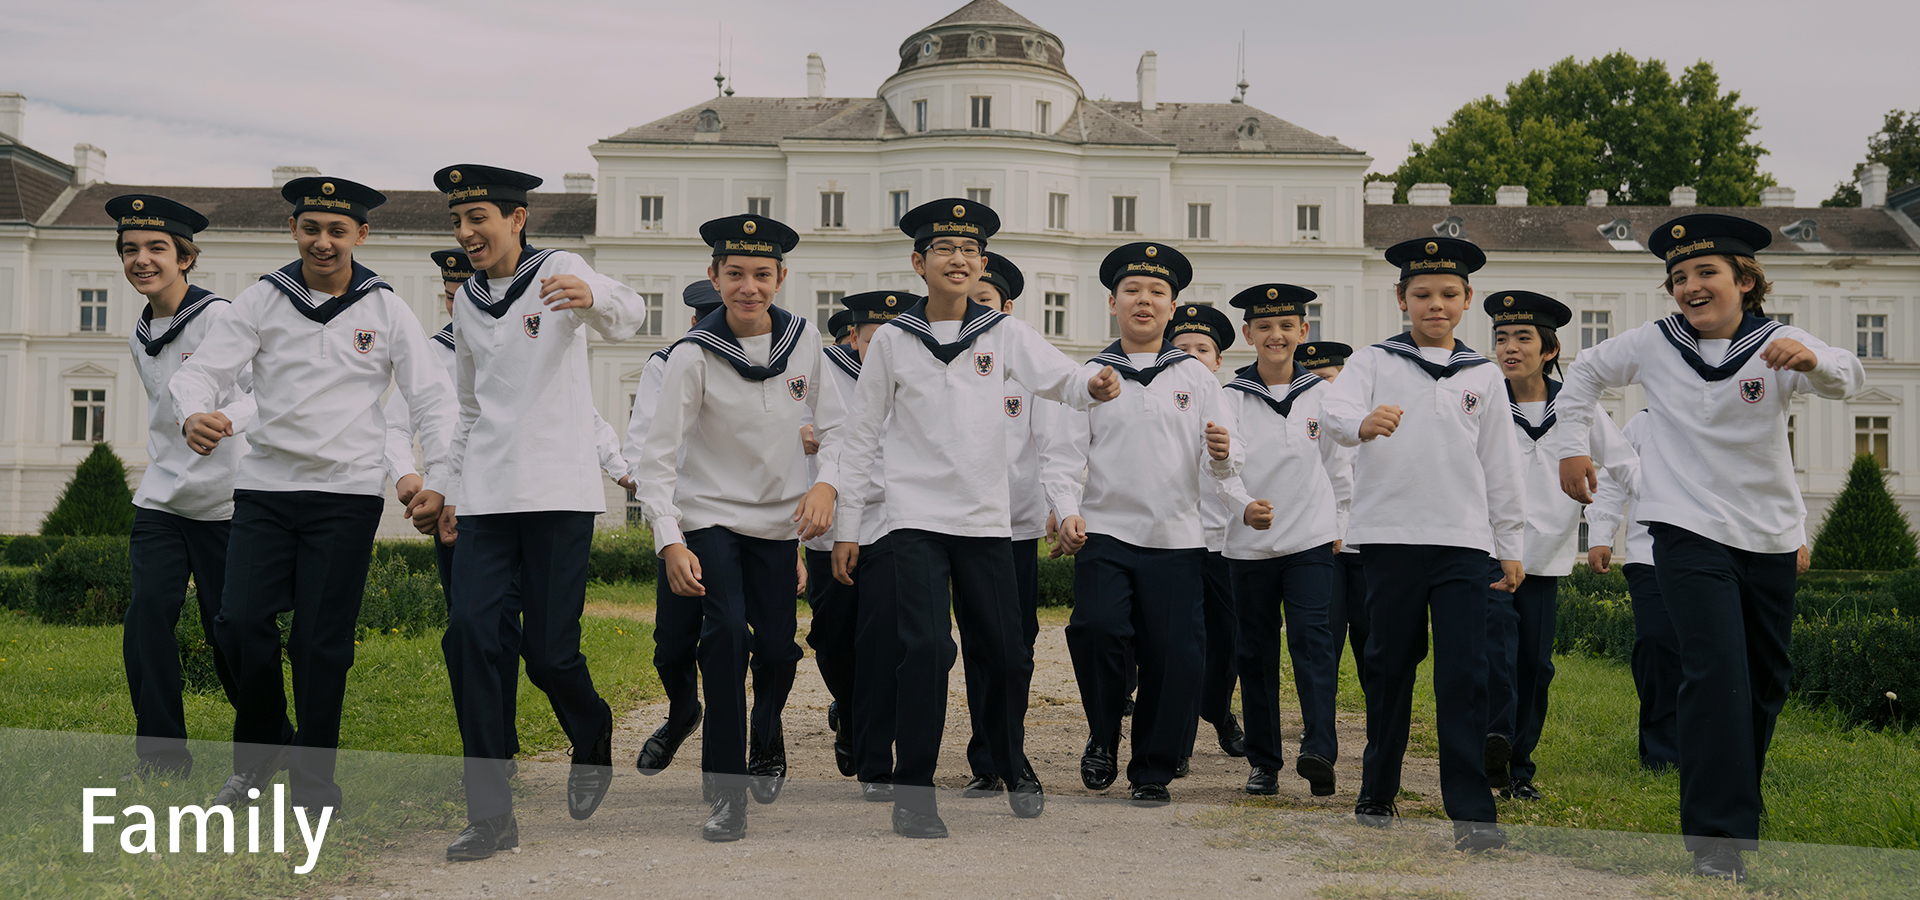 Vienna Boys Choir in out 2022/23 Family Series